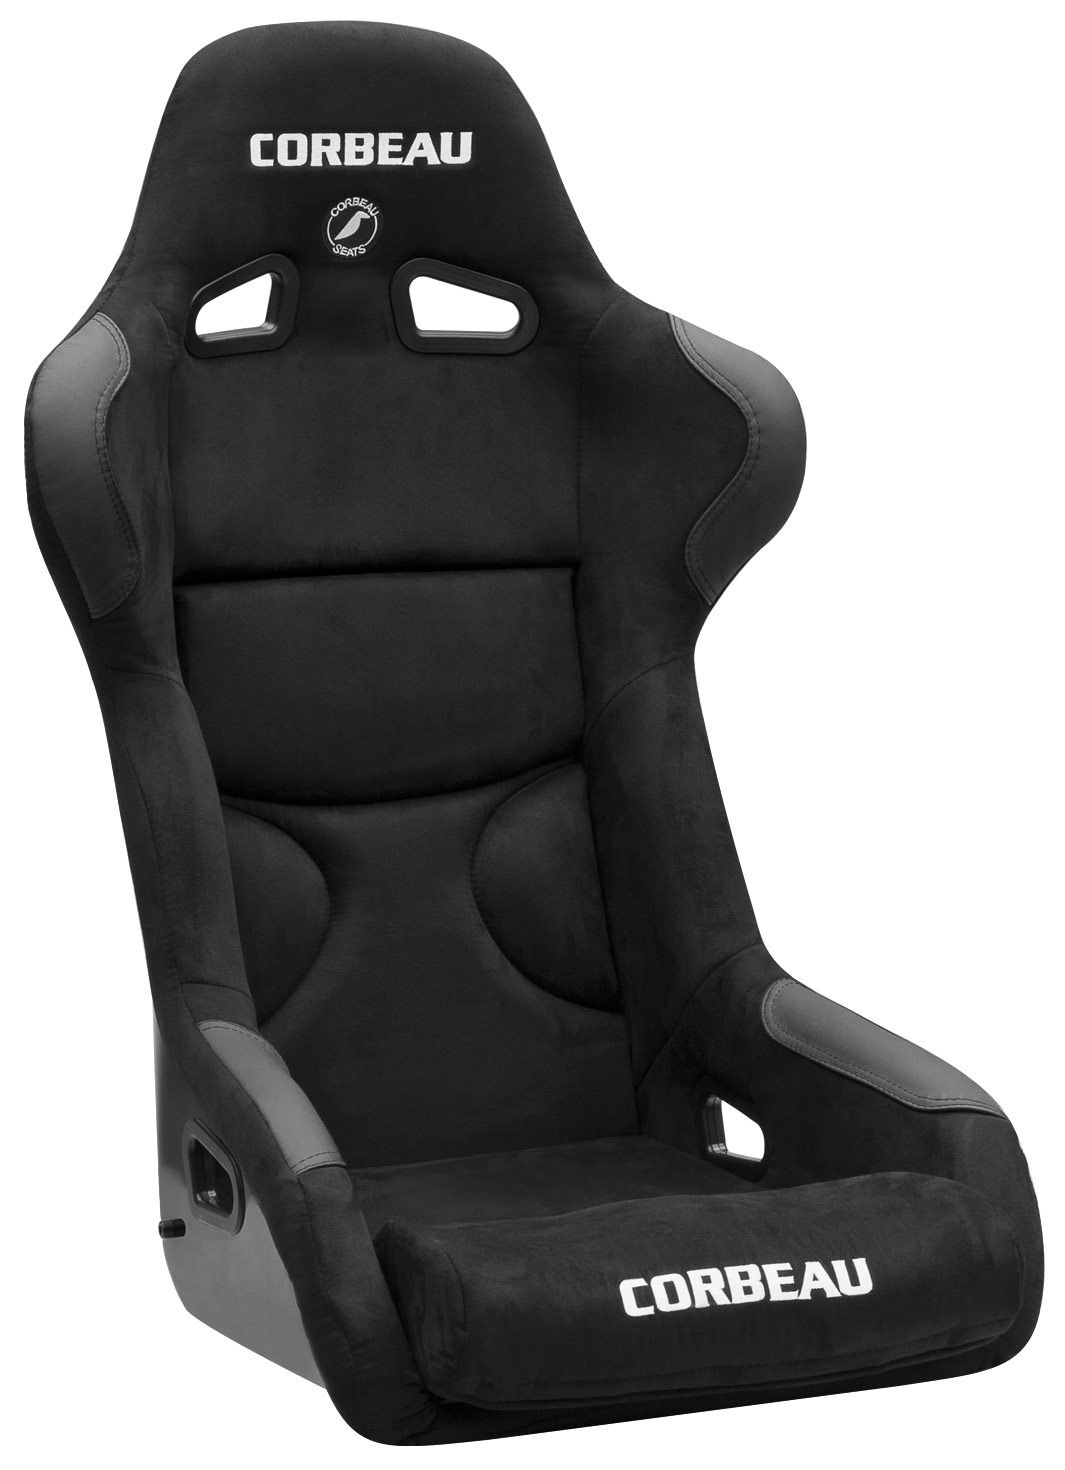 Corbeau FX1  Racing Seat, Black Microsuede Pro, S29501P